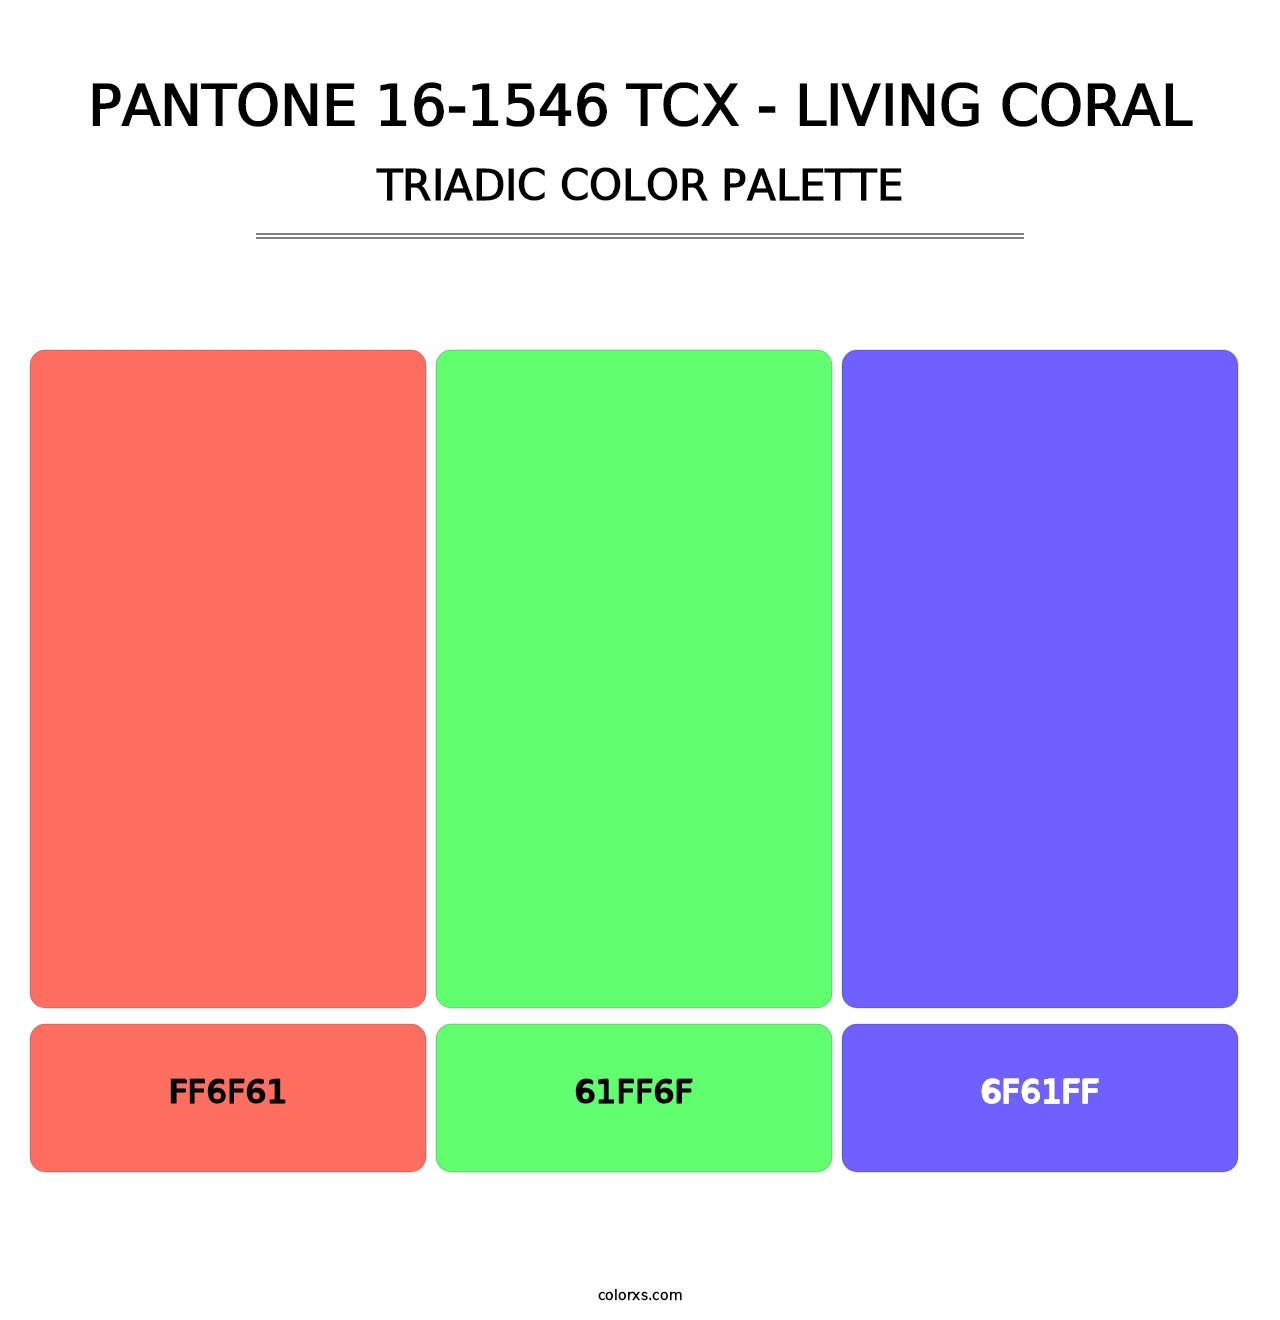 PANTONE 16-1546 TCX - Living Coral - Triadic Color Palette